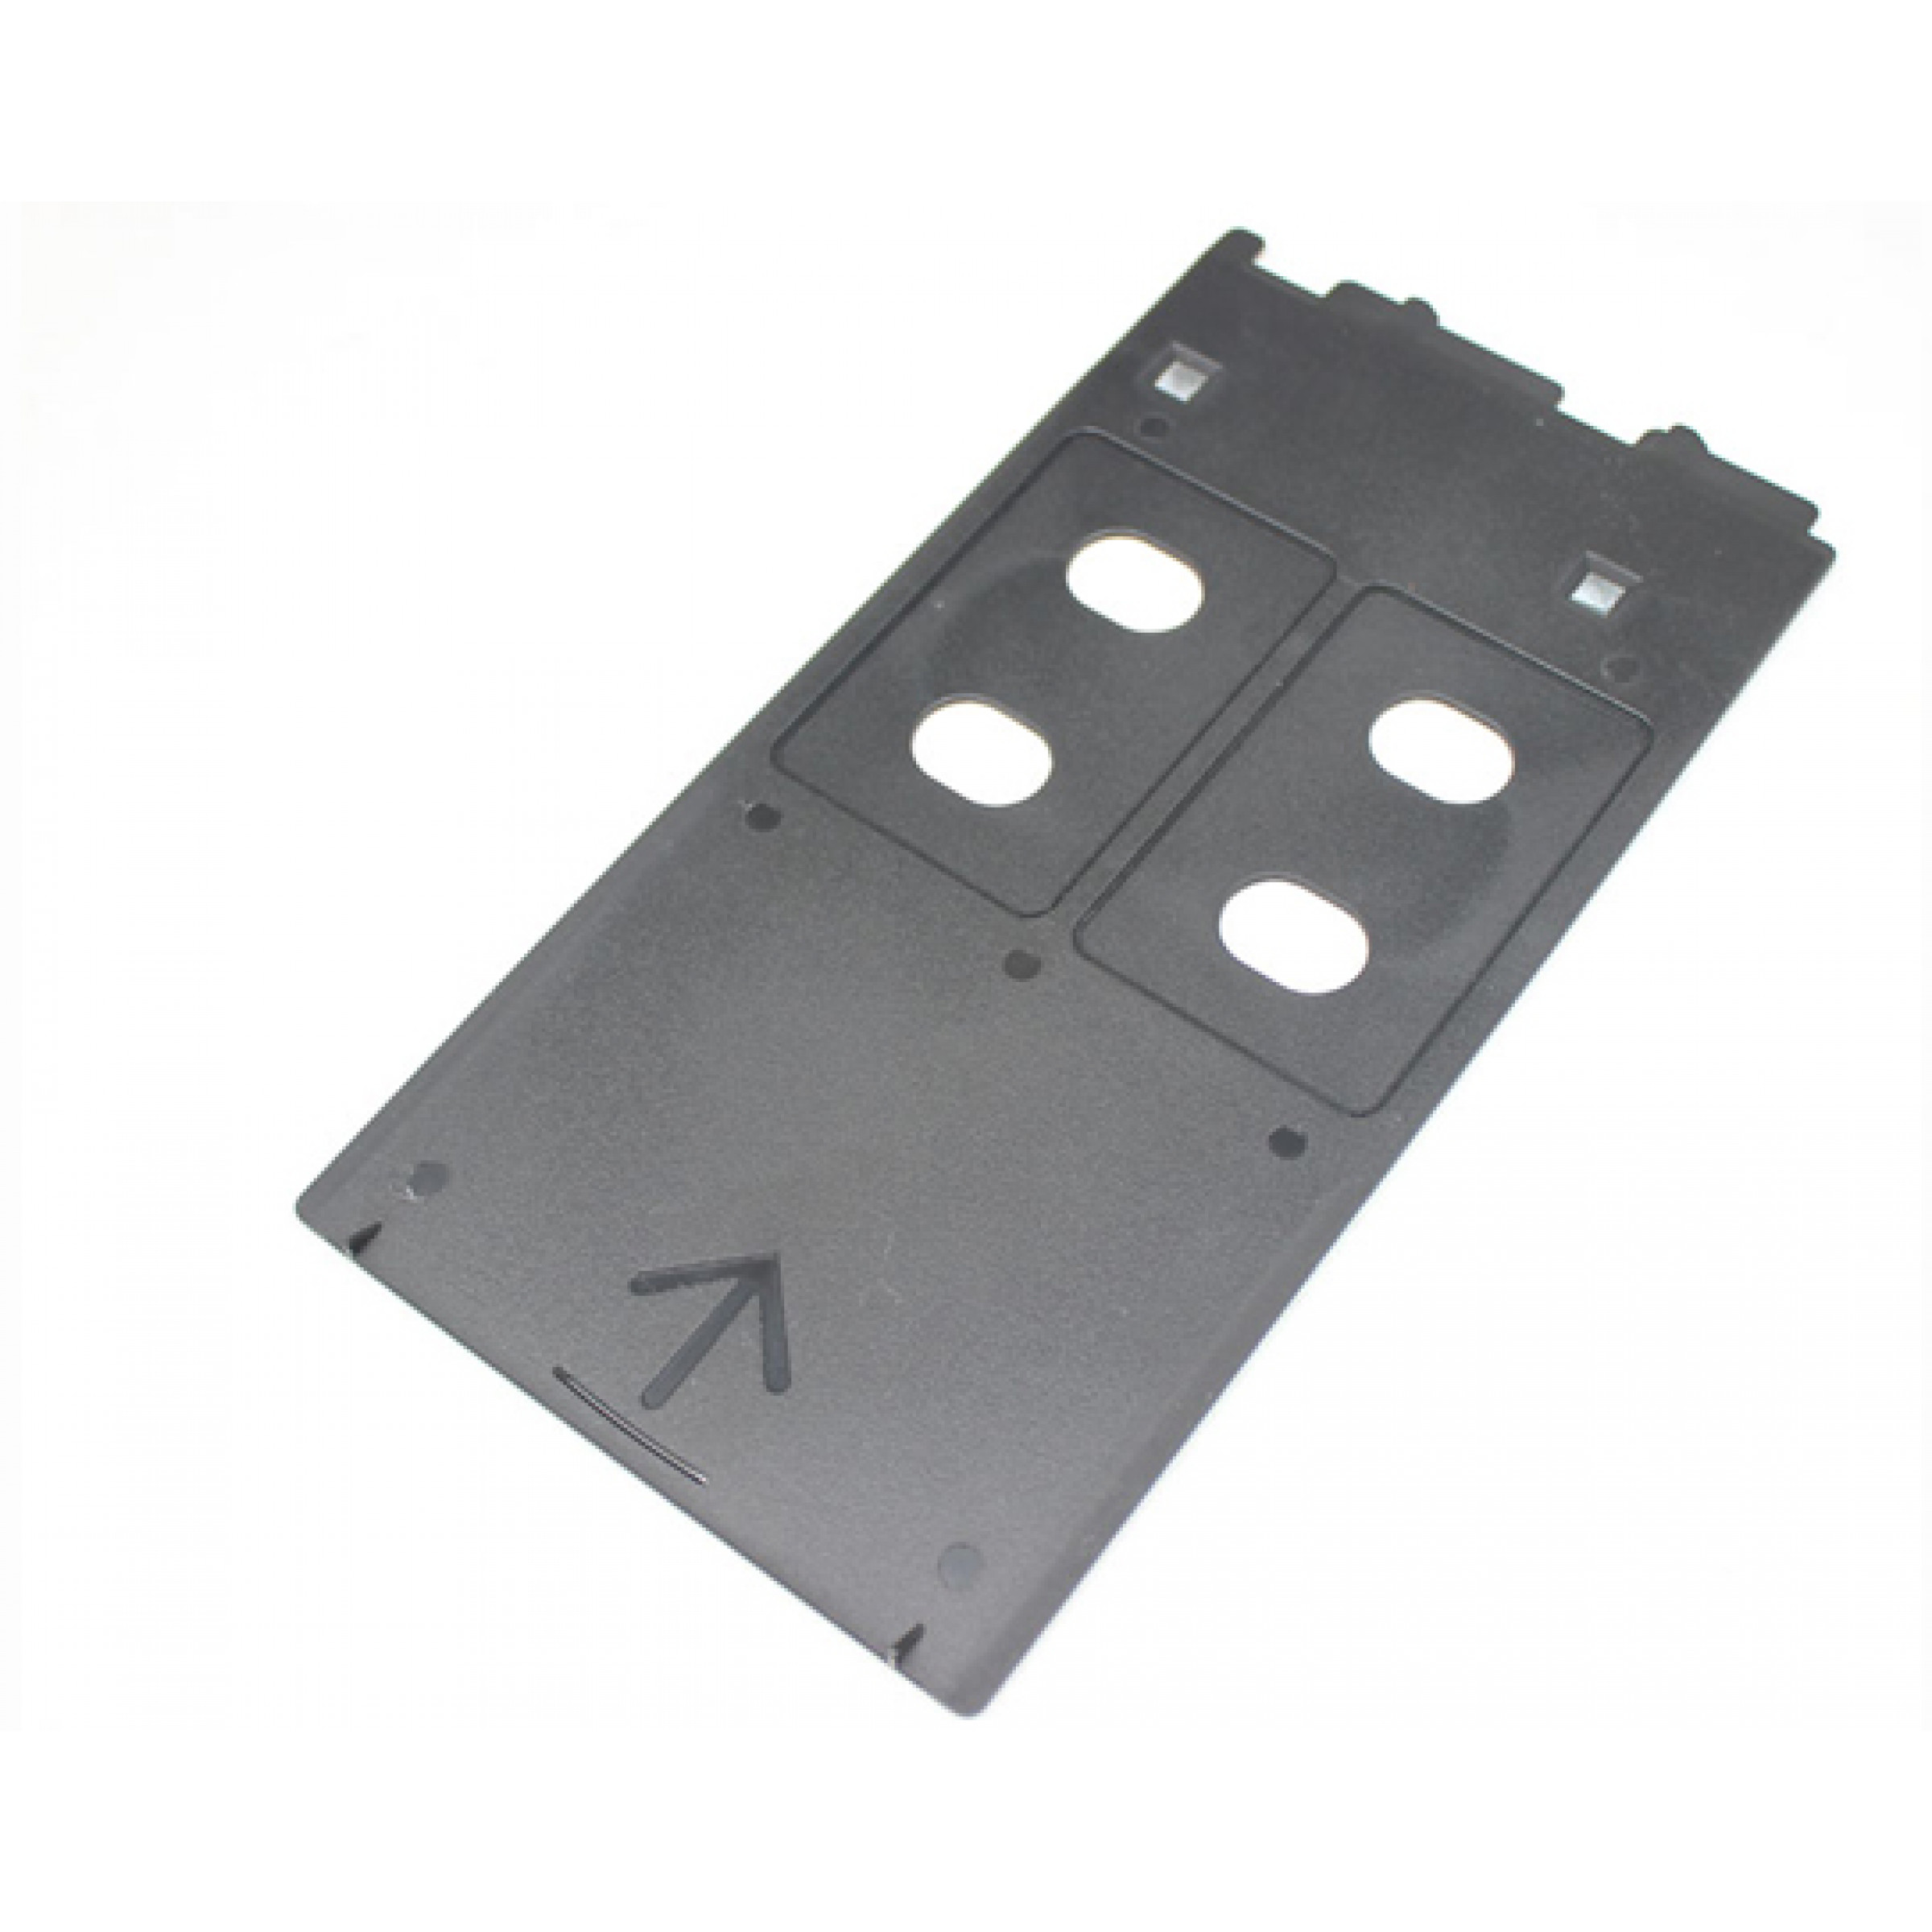 Inkjet PVC ID Card J Tray for Canon MG5420 MG6320 MX922 MG7120 iP7230 iP7220 Printer 